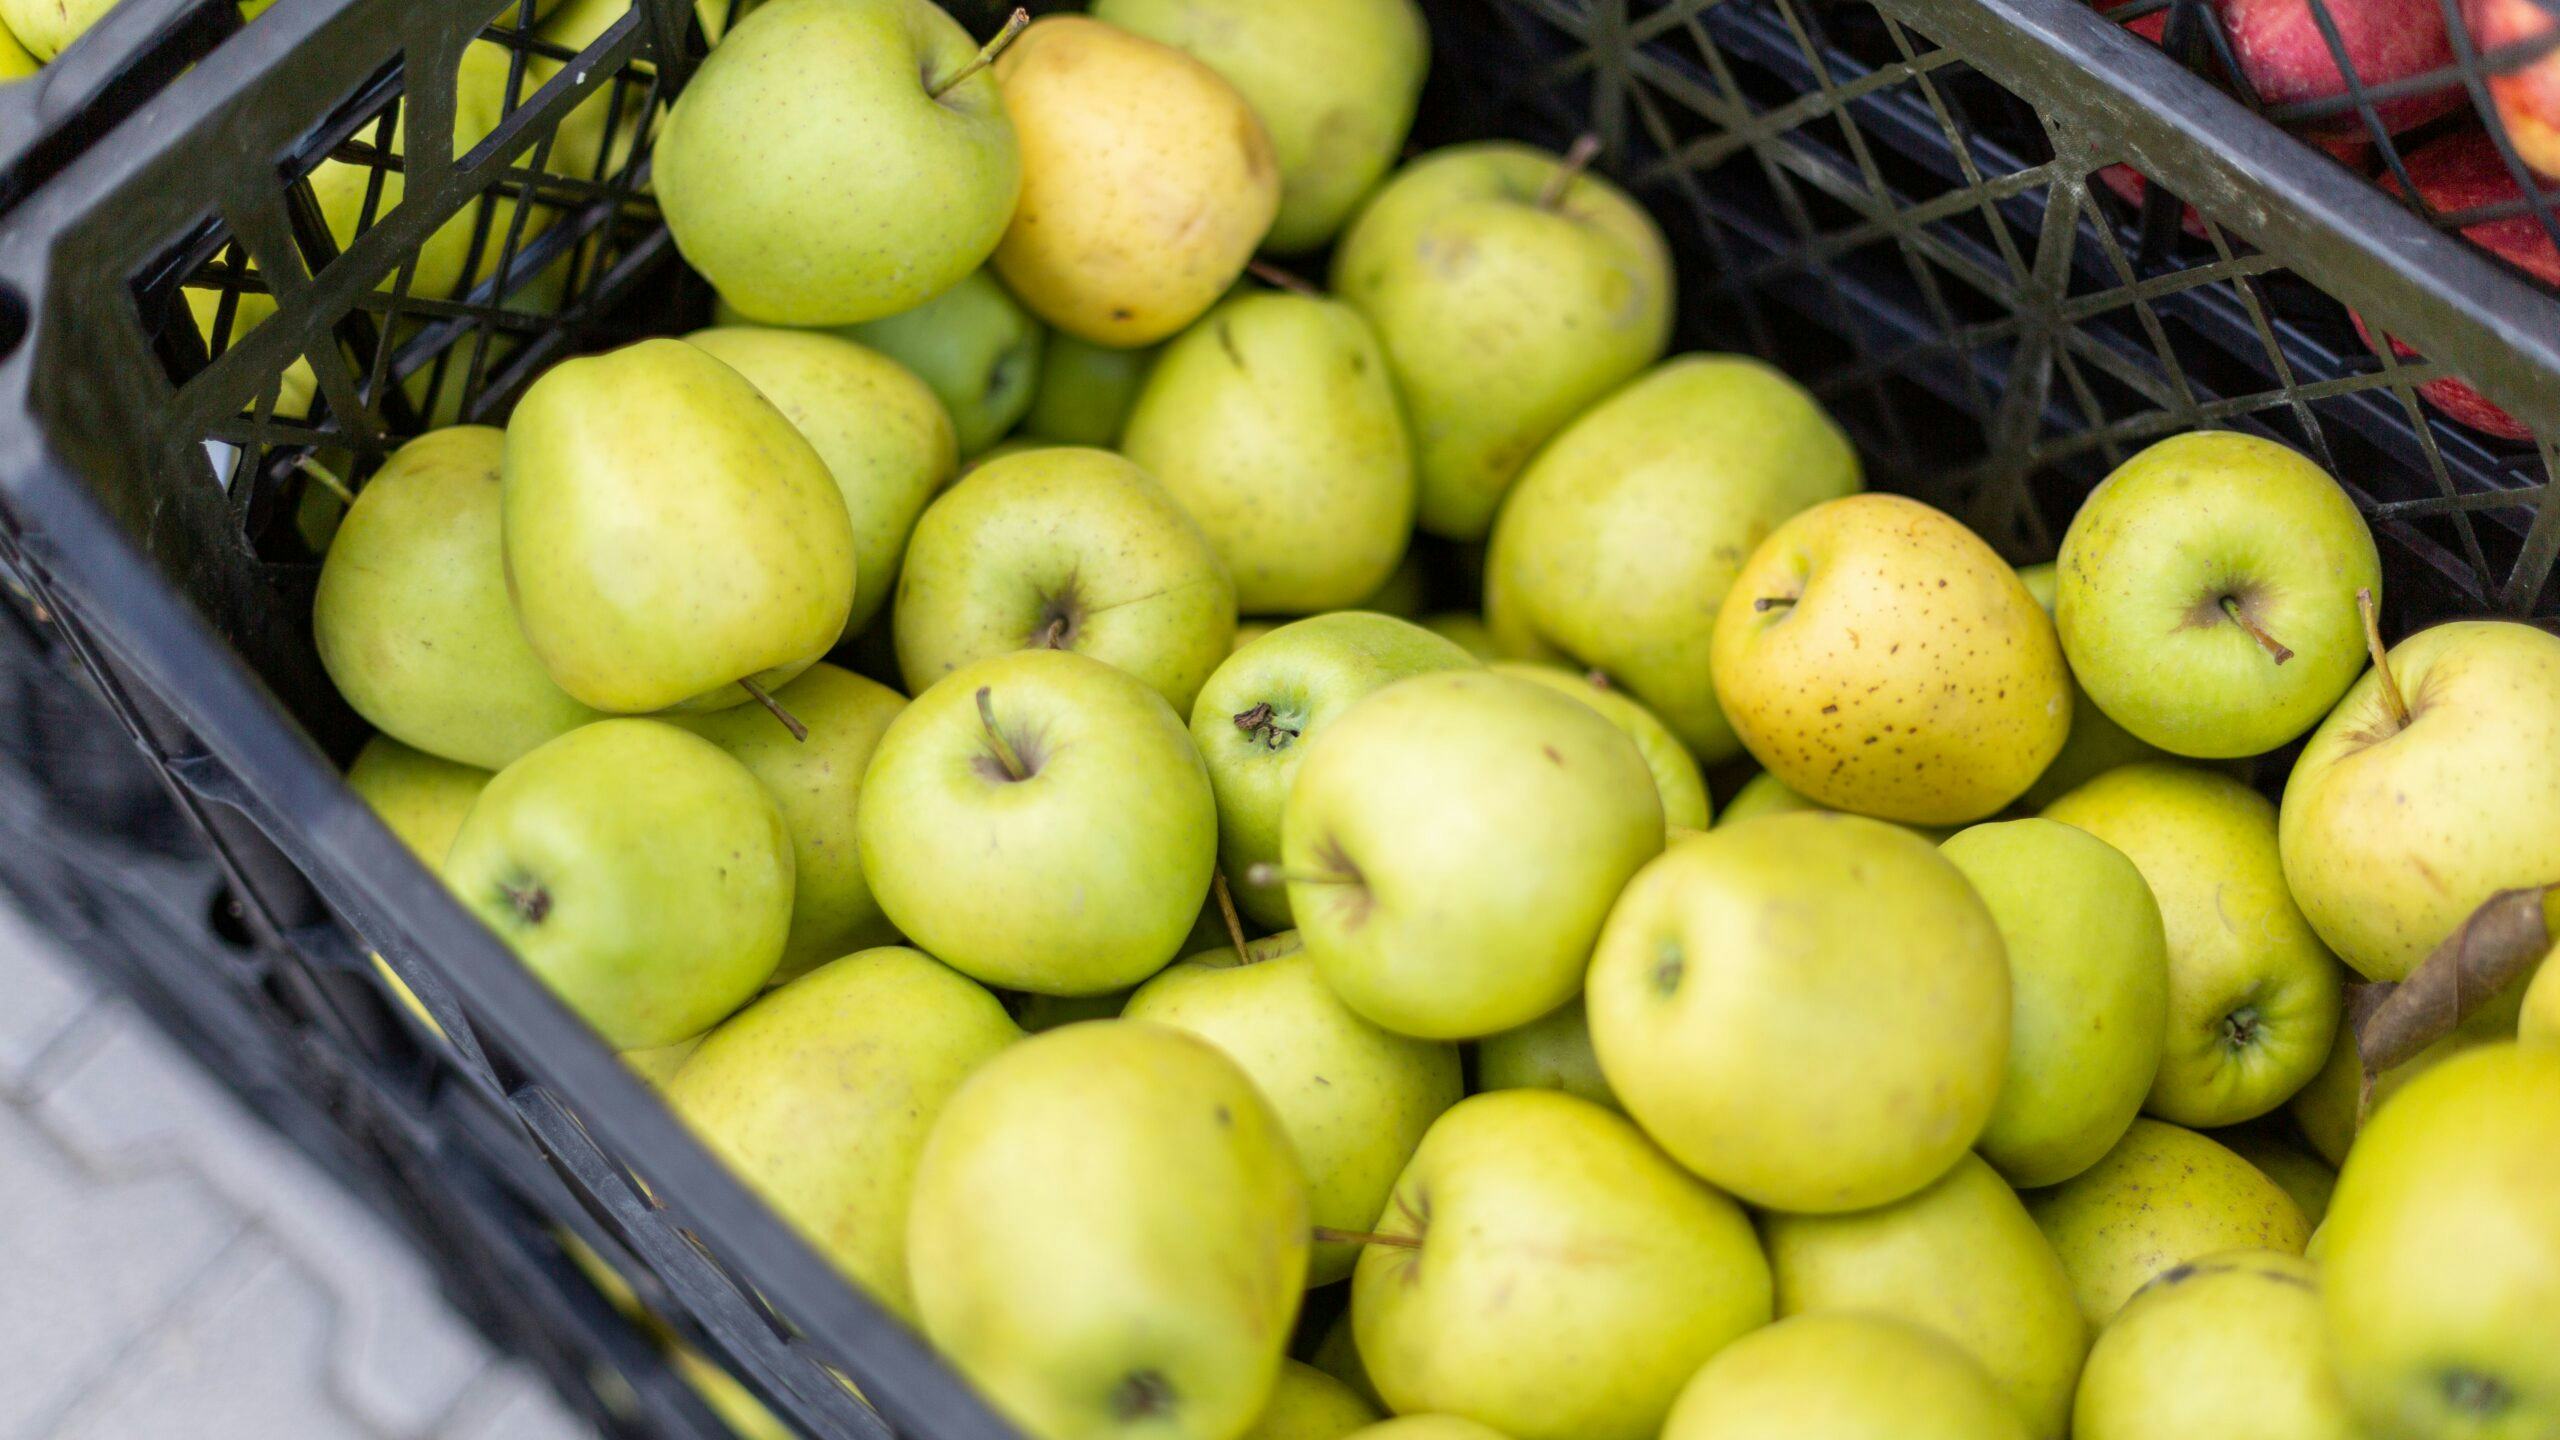 Nederlandse start-up maakt sap van overtollig fruit